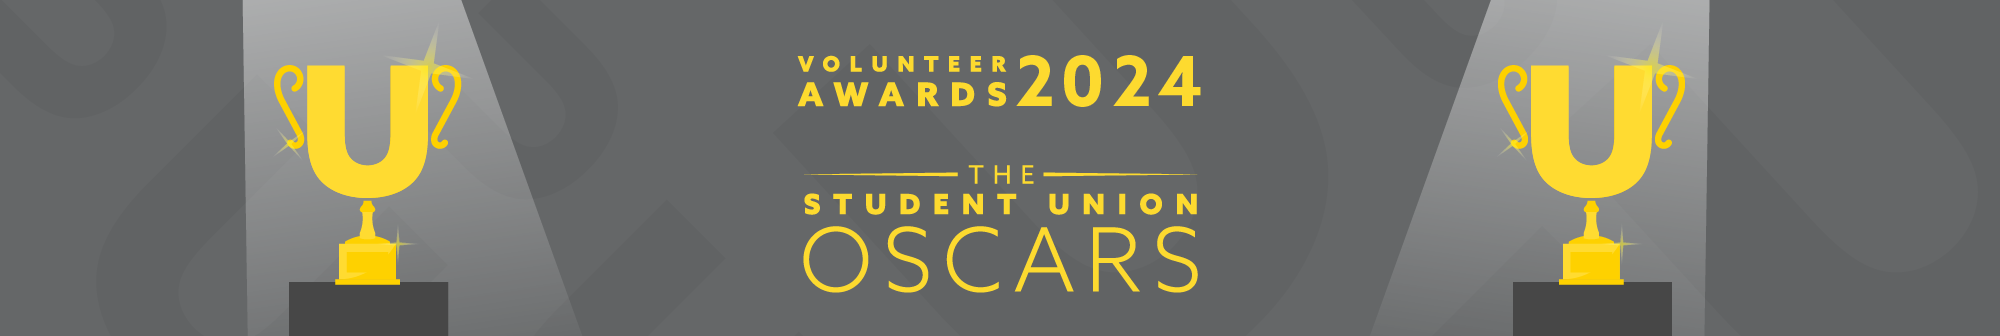 Volunteer Awards 2024 and Union Oscars 2024